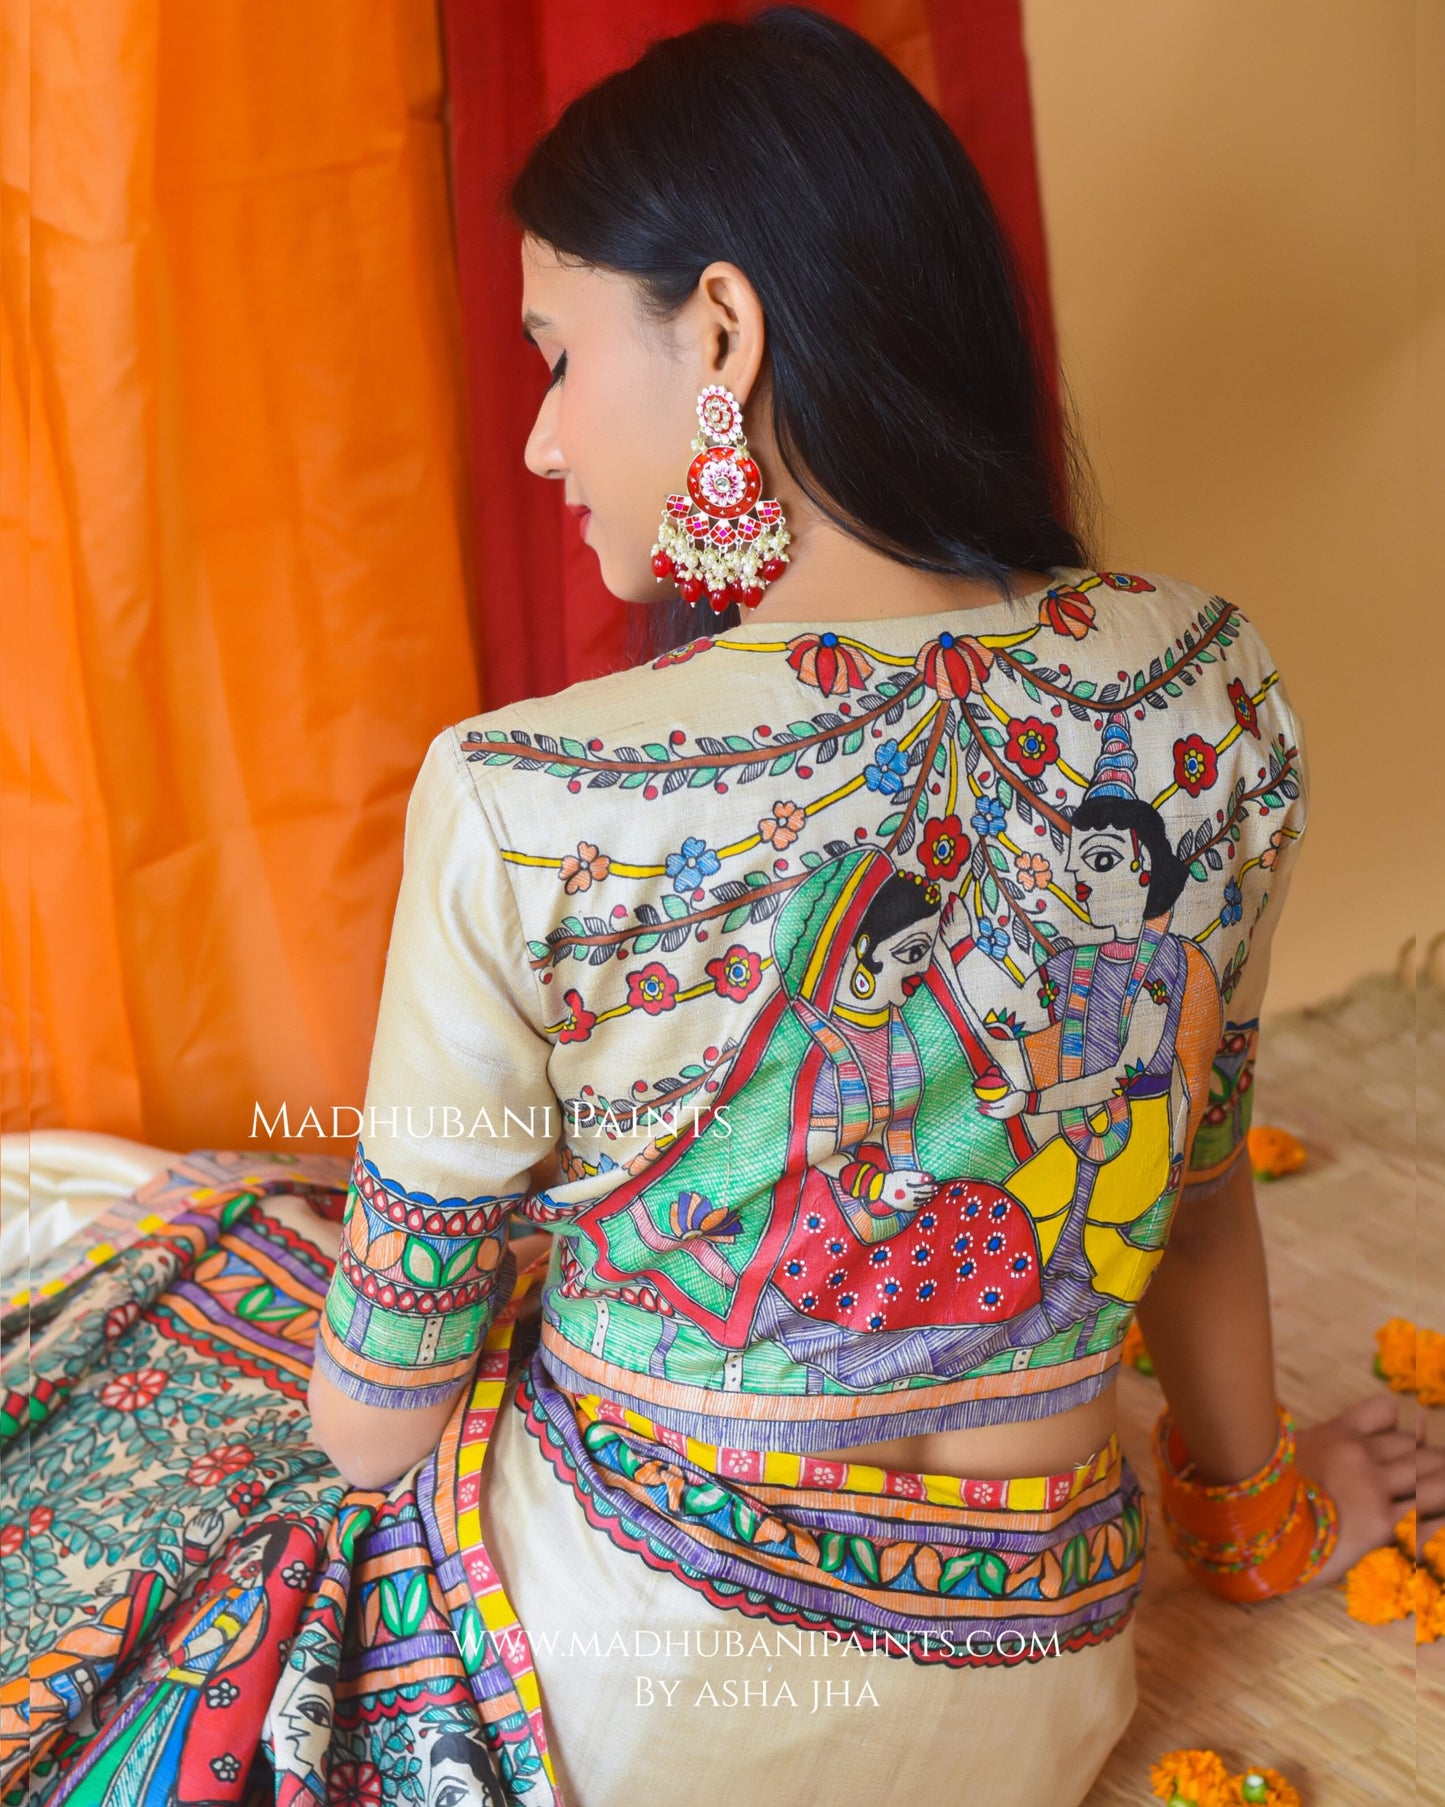 MITHILANCHAL VIVAH Hand-painted Madhubani Tussar Silk Blouse